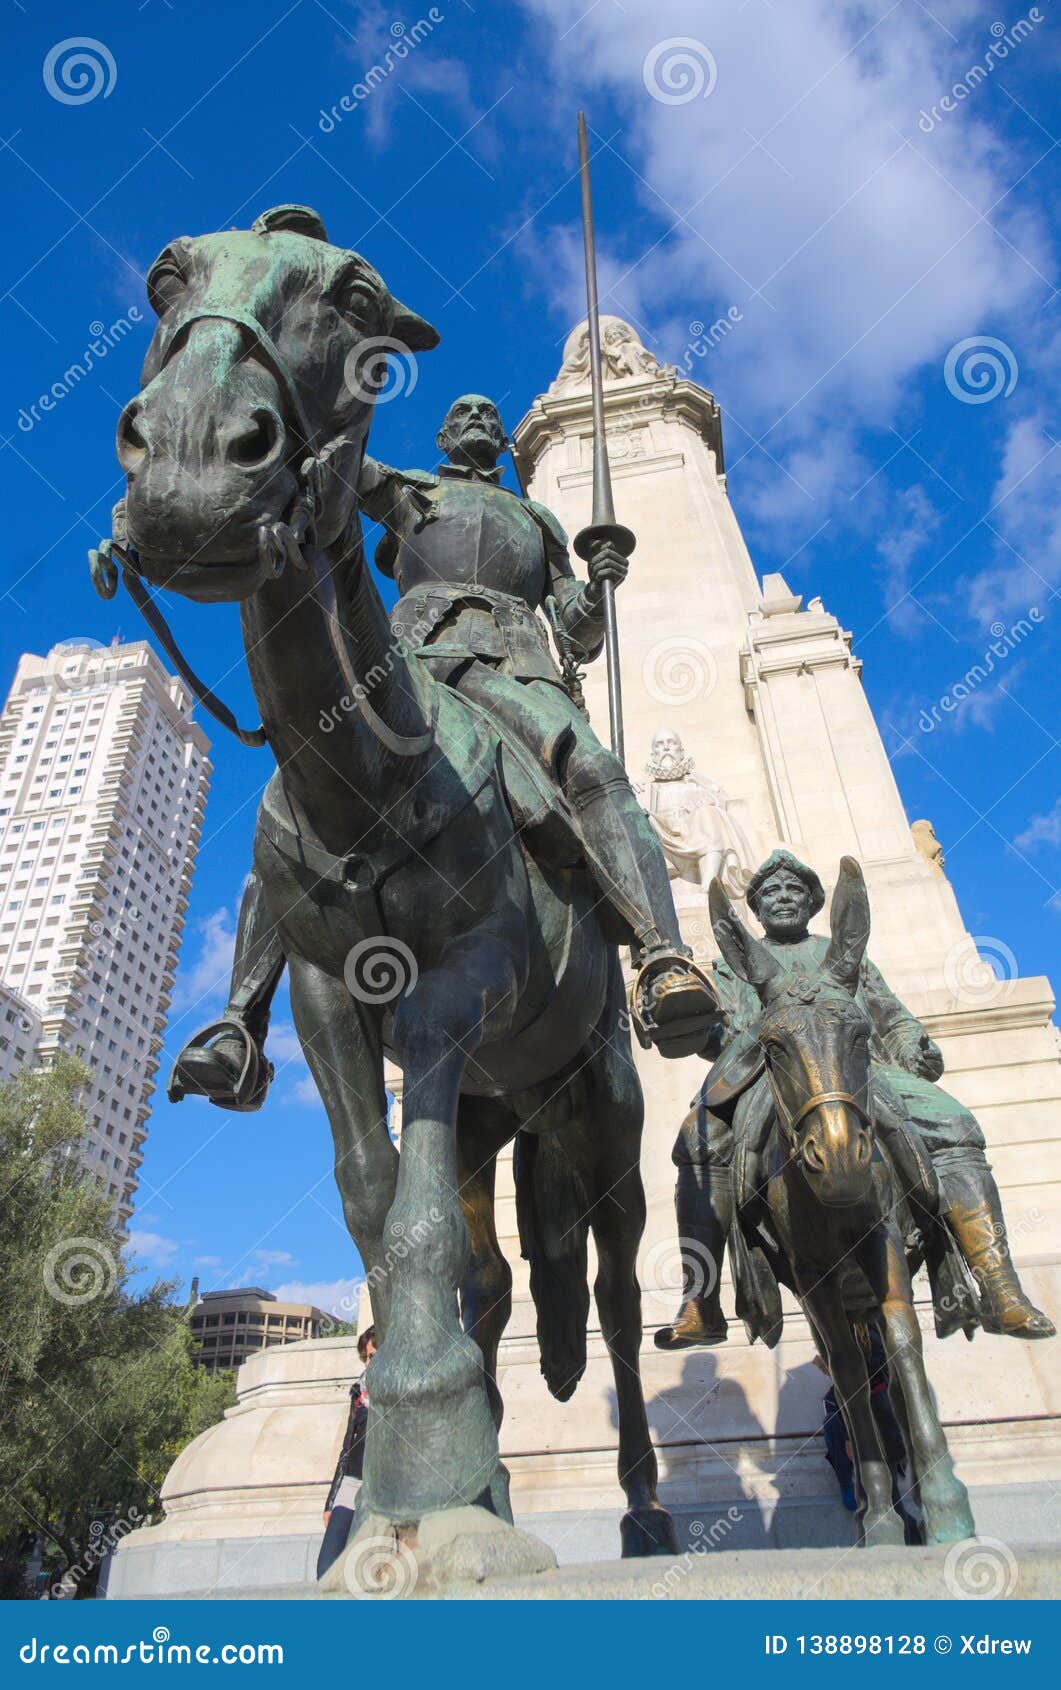 statues of don quixote and sancho panza at the plaza de espana in madrid.